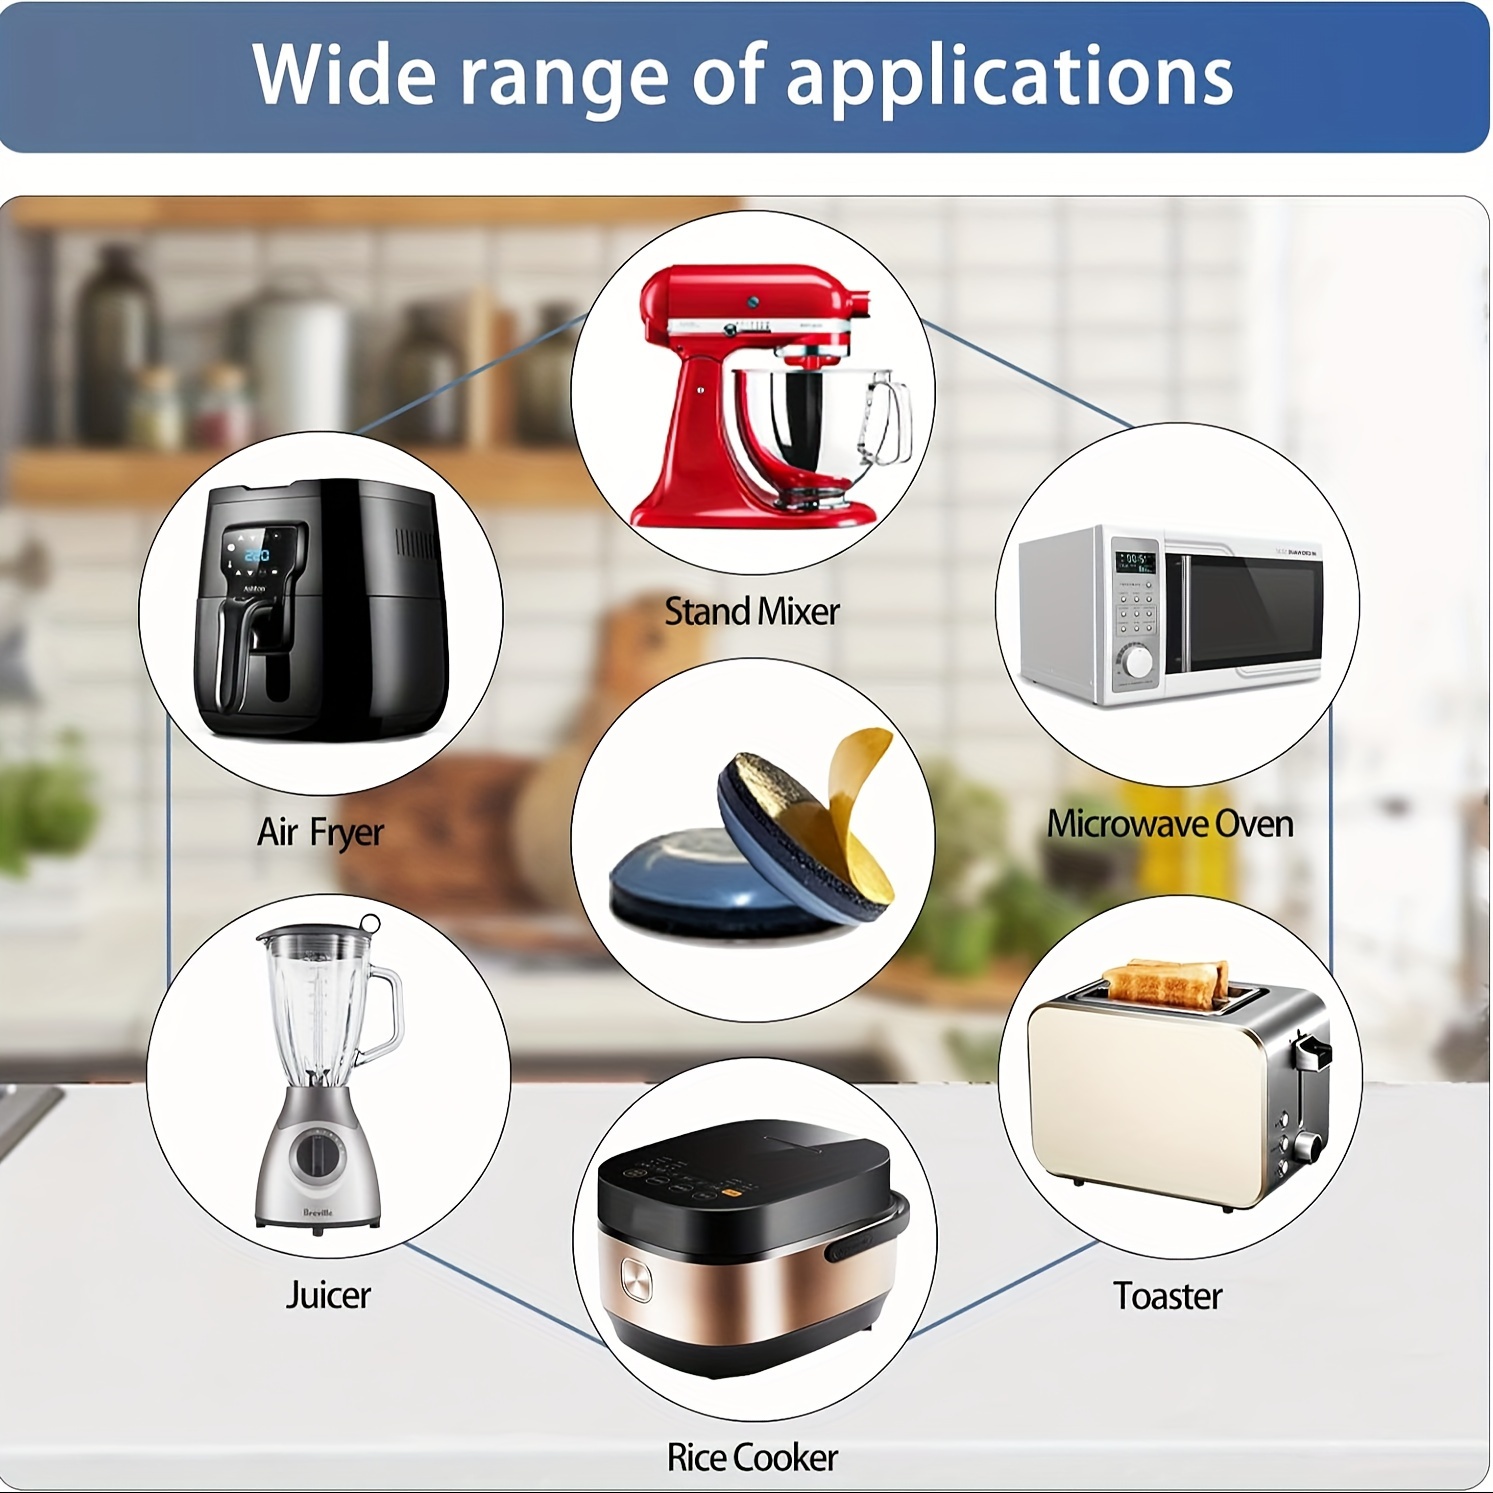  Appliance Sliders for Kitchen Appliances 24 PCS Self